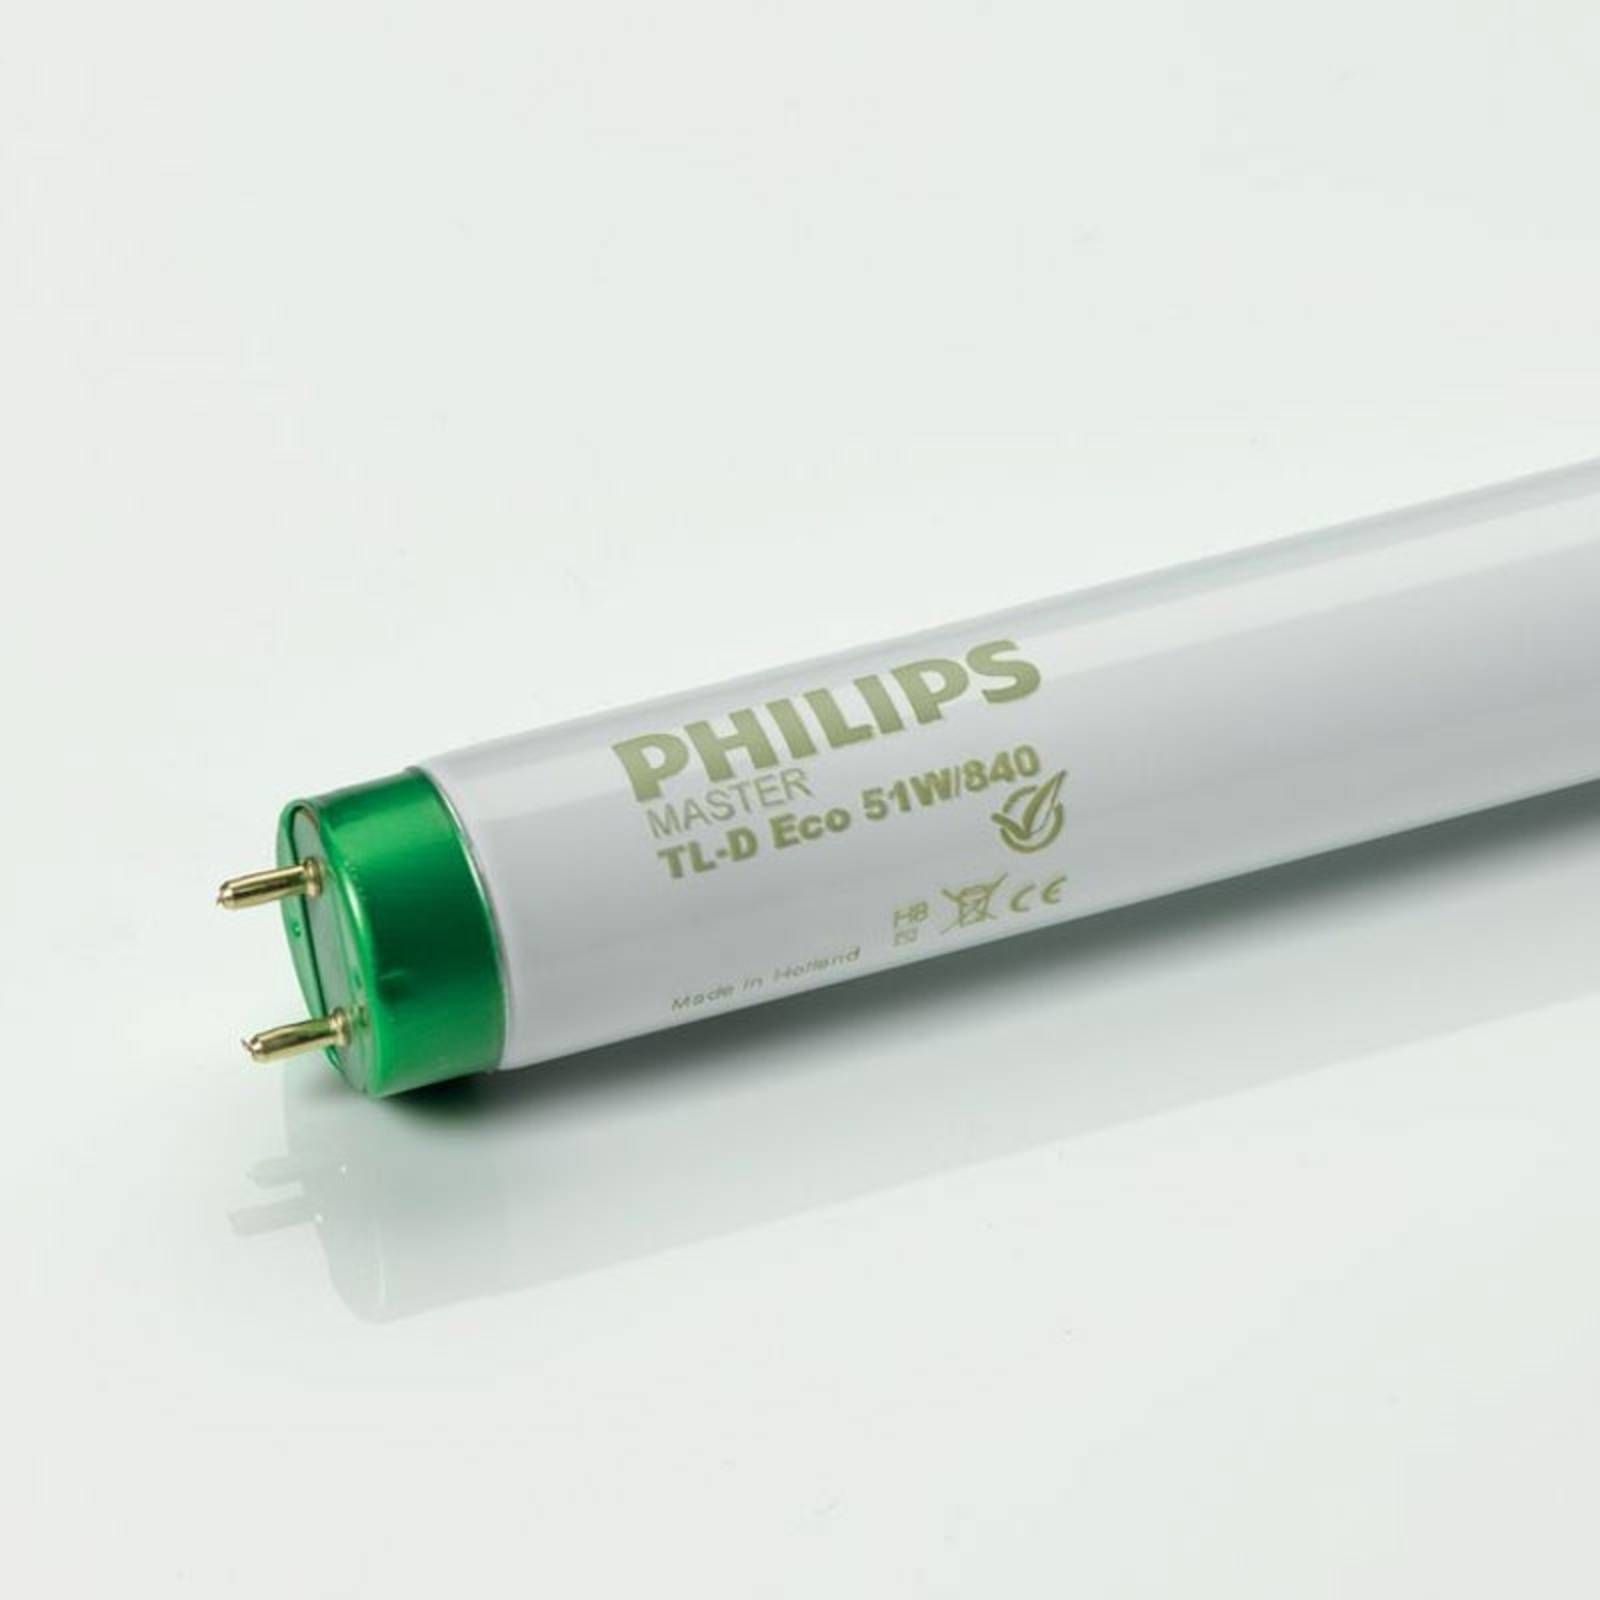 Philips Žiarivka G13 T8 Master TL-D Eco 865 51 W, G13, Energialuokka: G, P: 151.42 cm